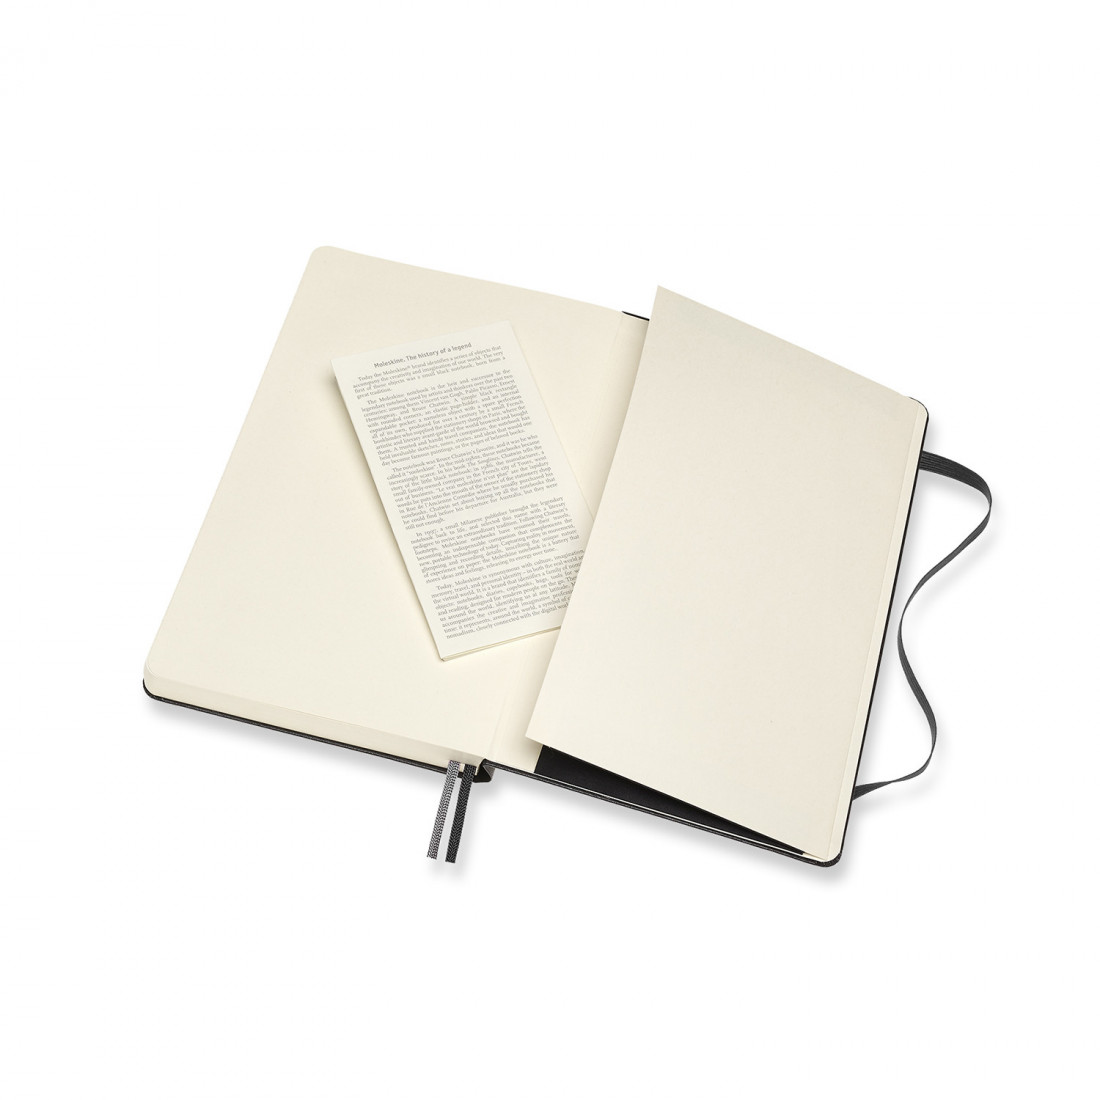 Notebook Large 13x21 Ruled Expanded Version Black Hard Cover Moleskine